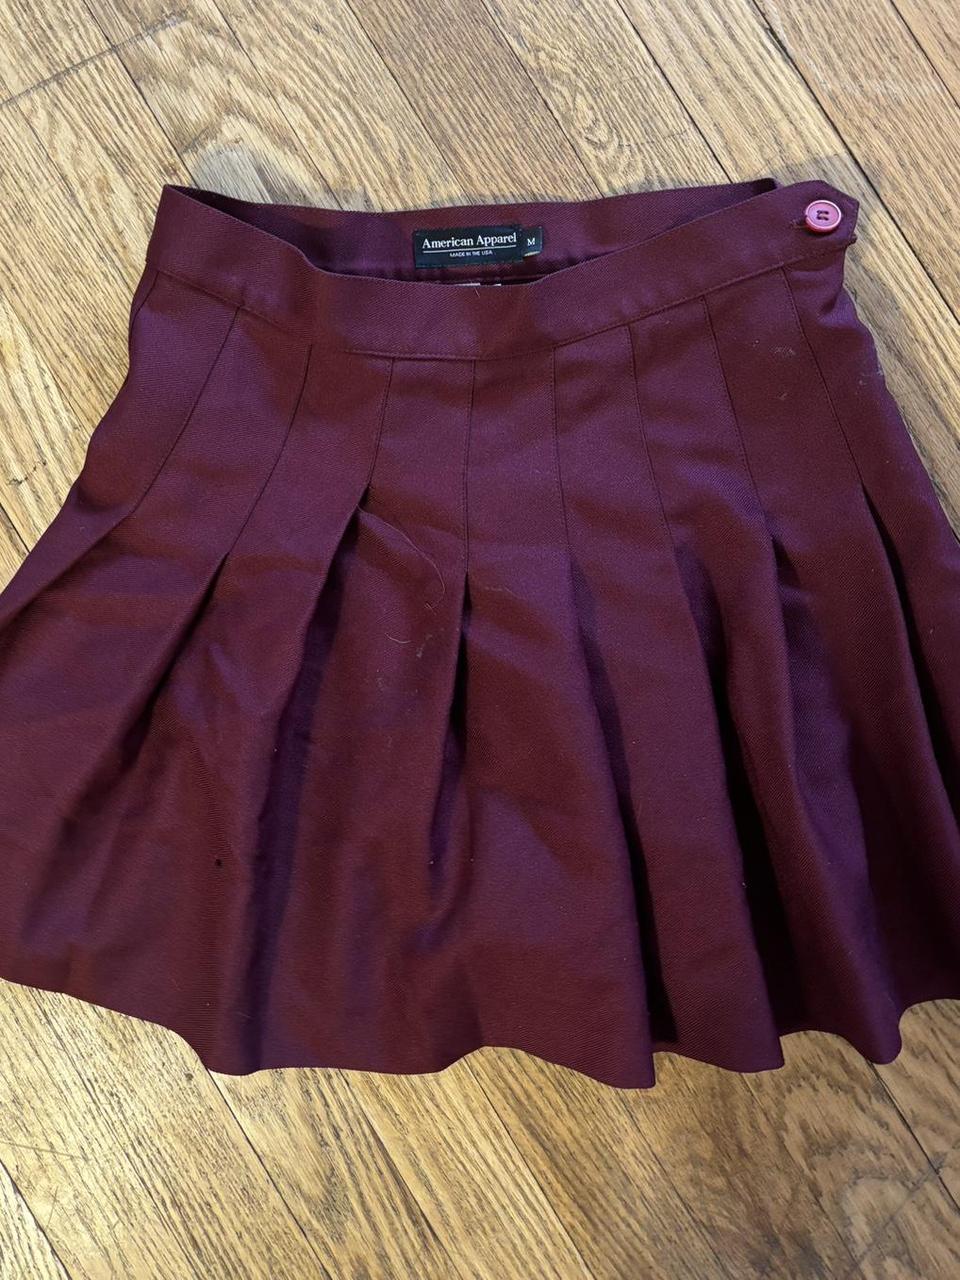 American Apparel Women's Burgundy Skirt (3)